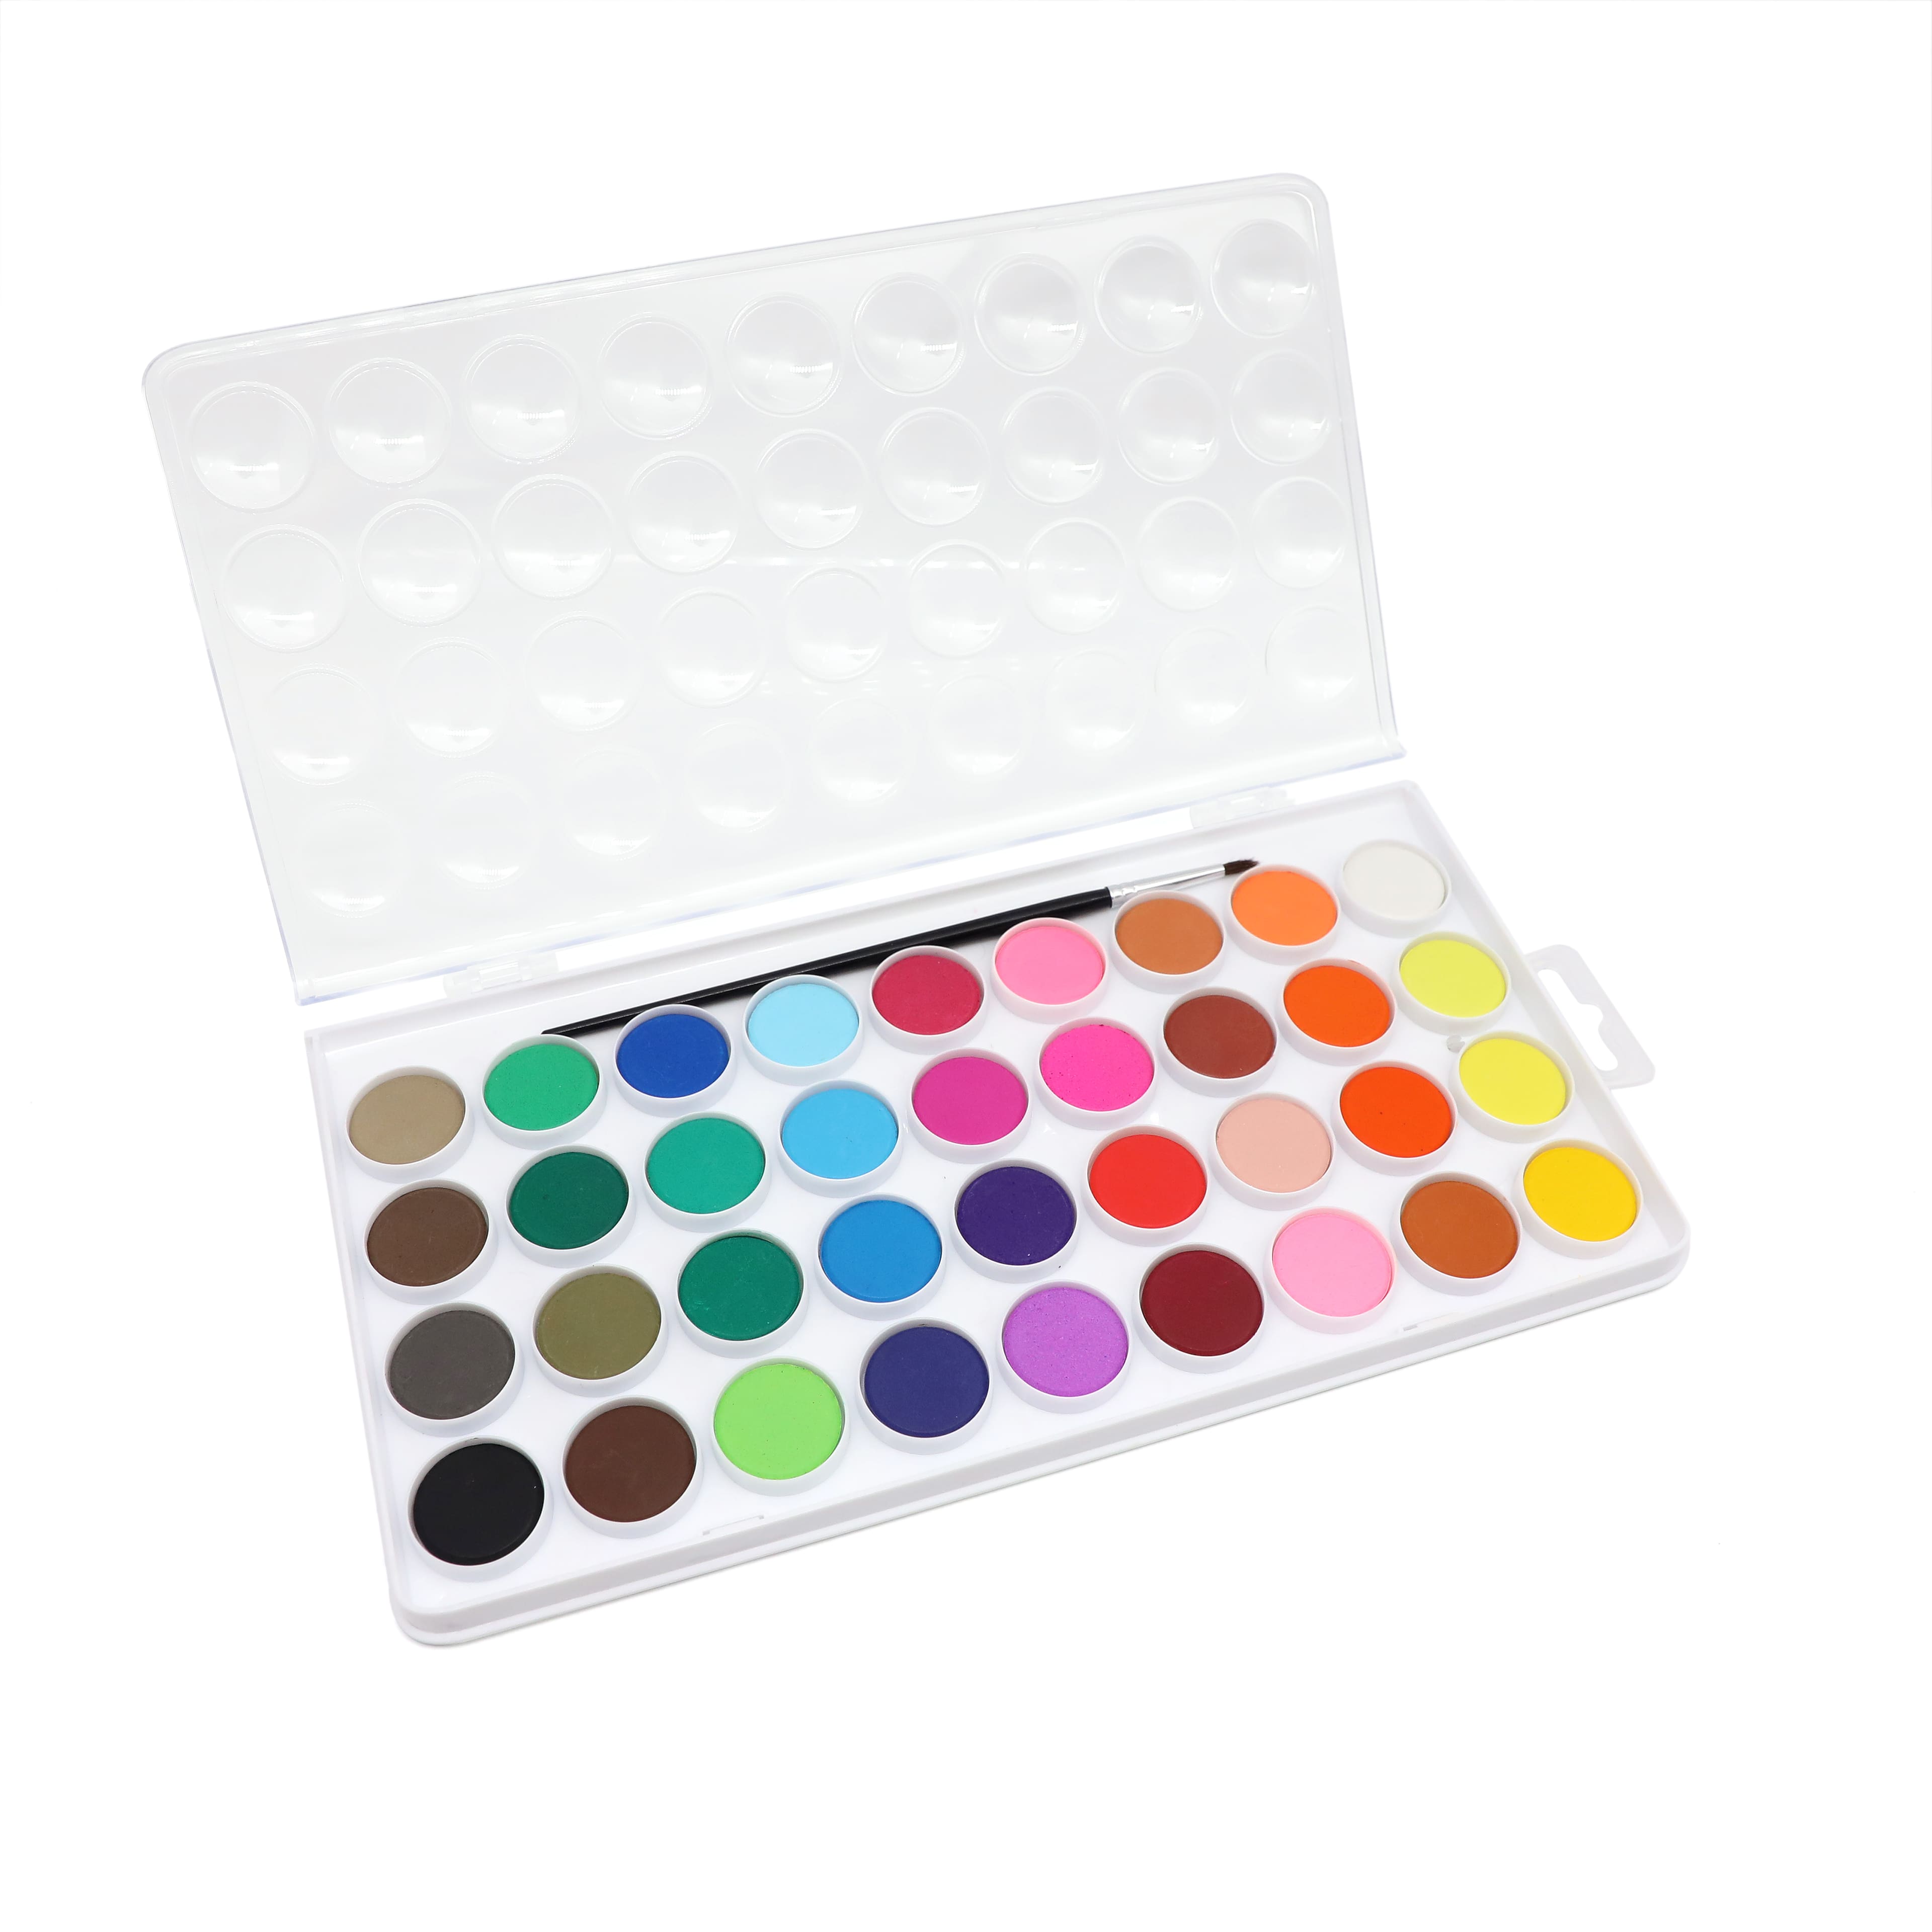 12 Pack: 36 Color Watercolor Cake Set by Artist&#x27;s Loft&#x2122; Necessities&#x2122;